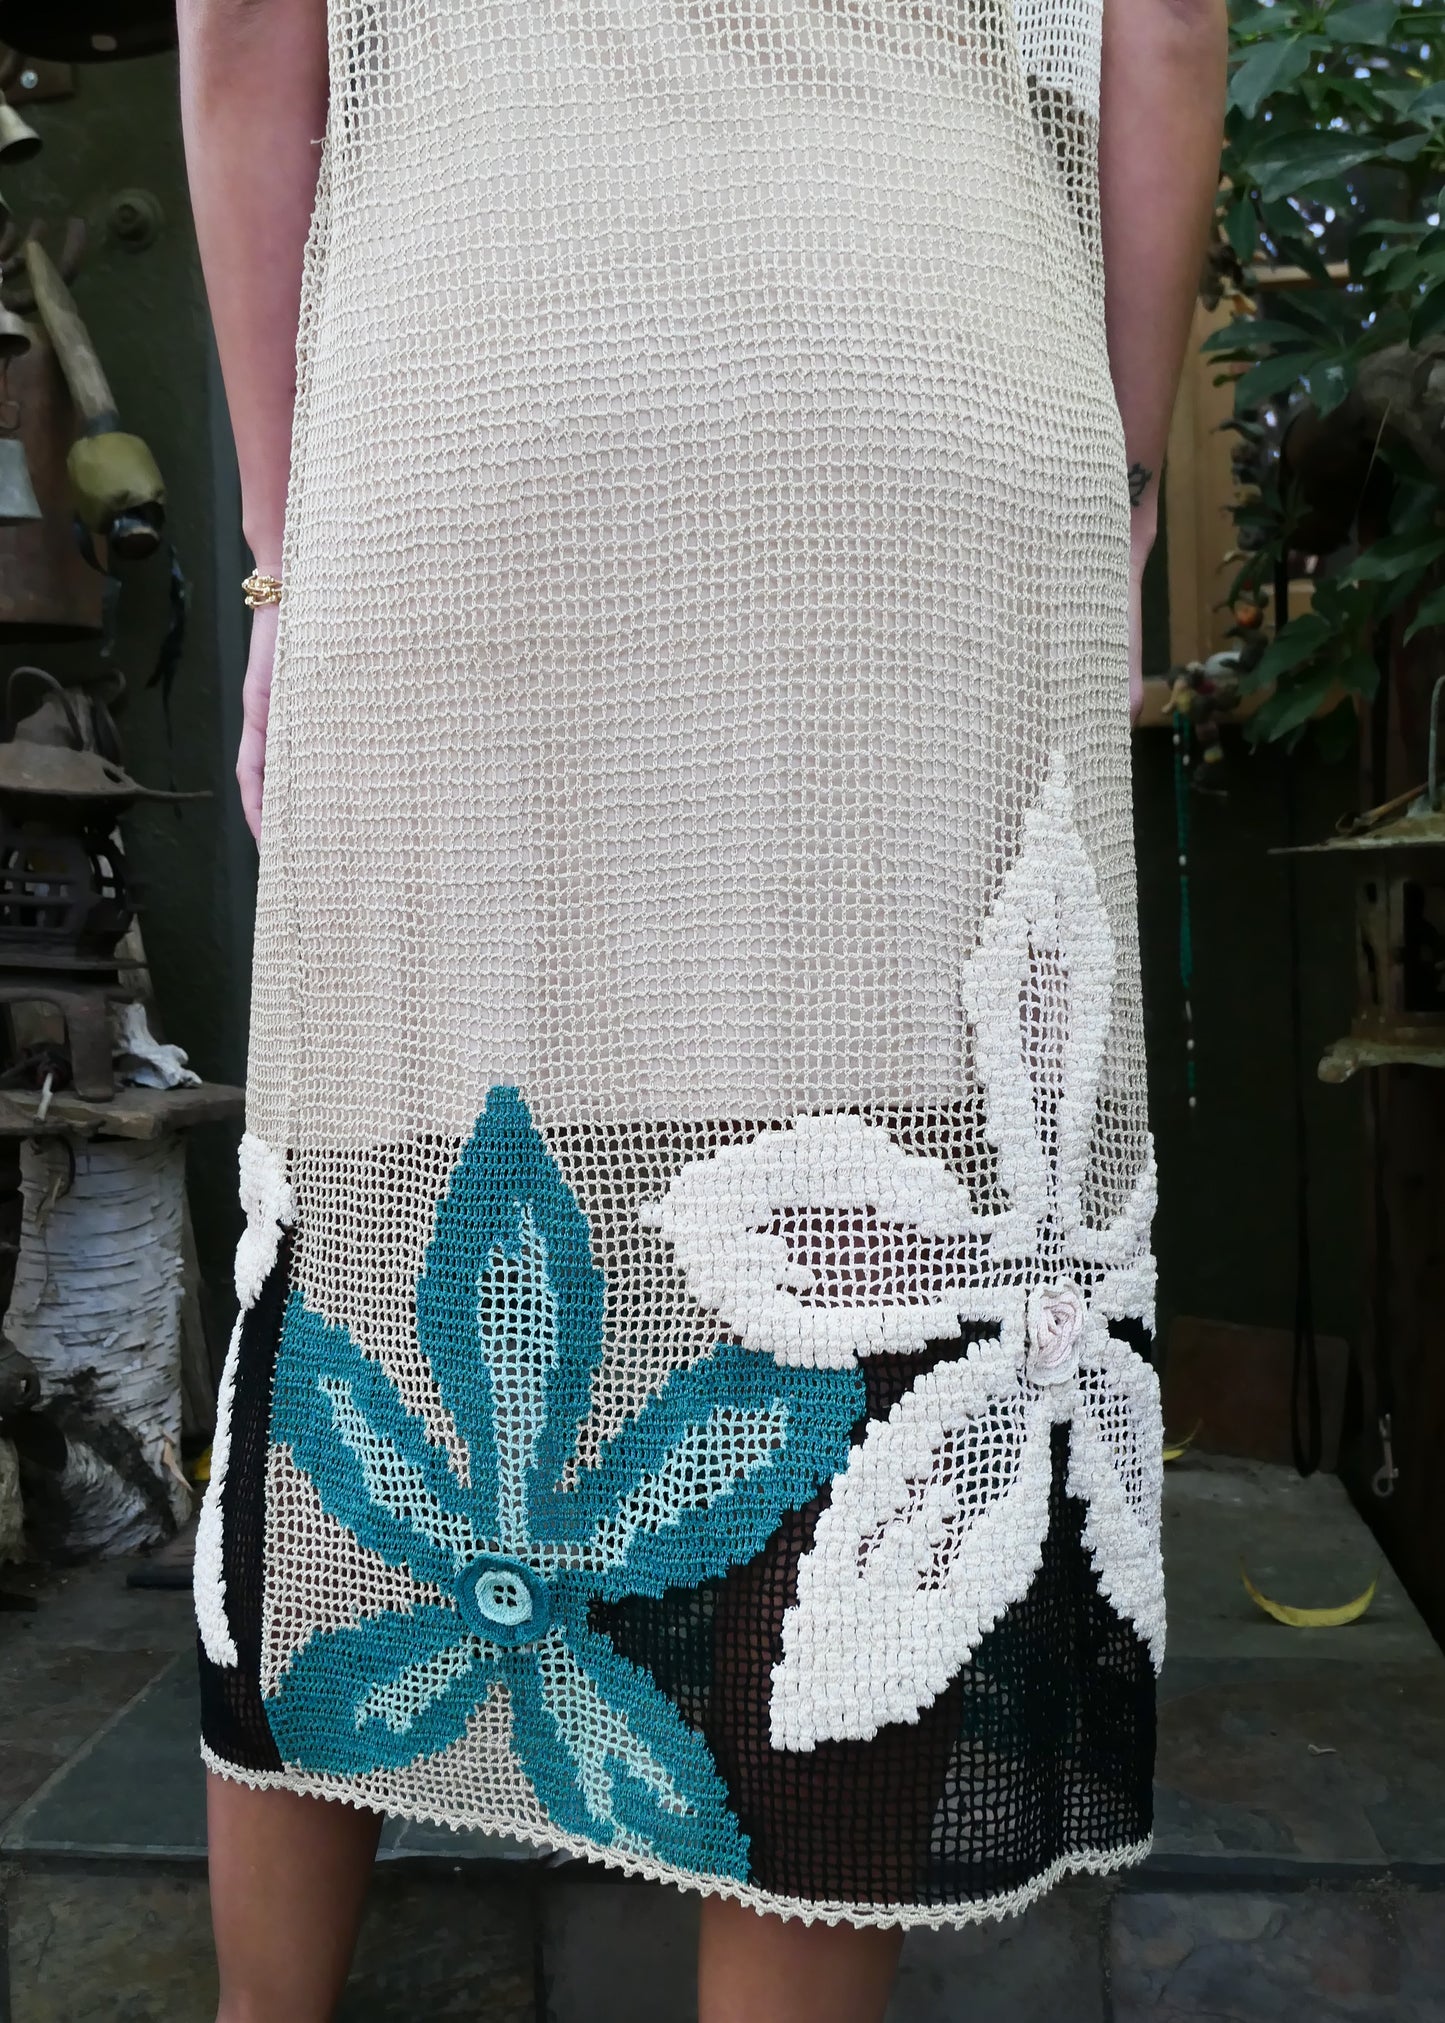 The Mumu Crochet Dress with Island Inspired Flowers